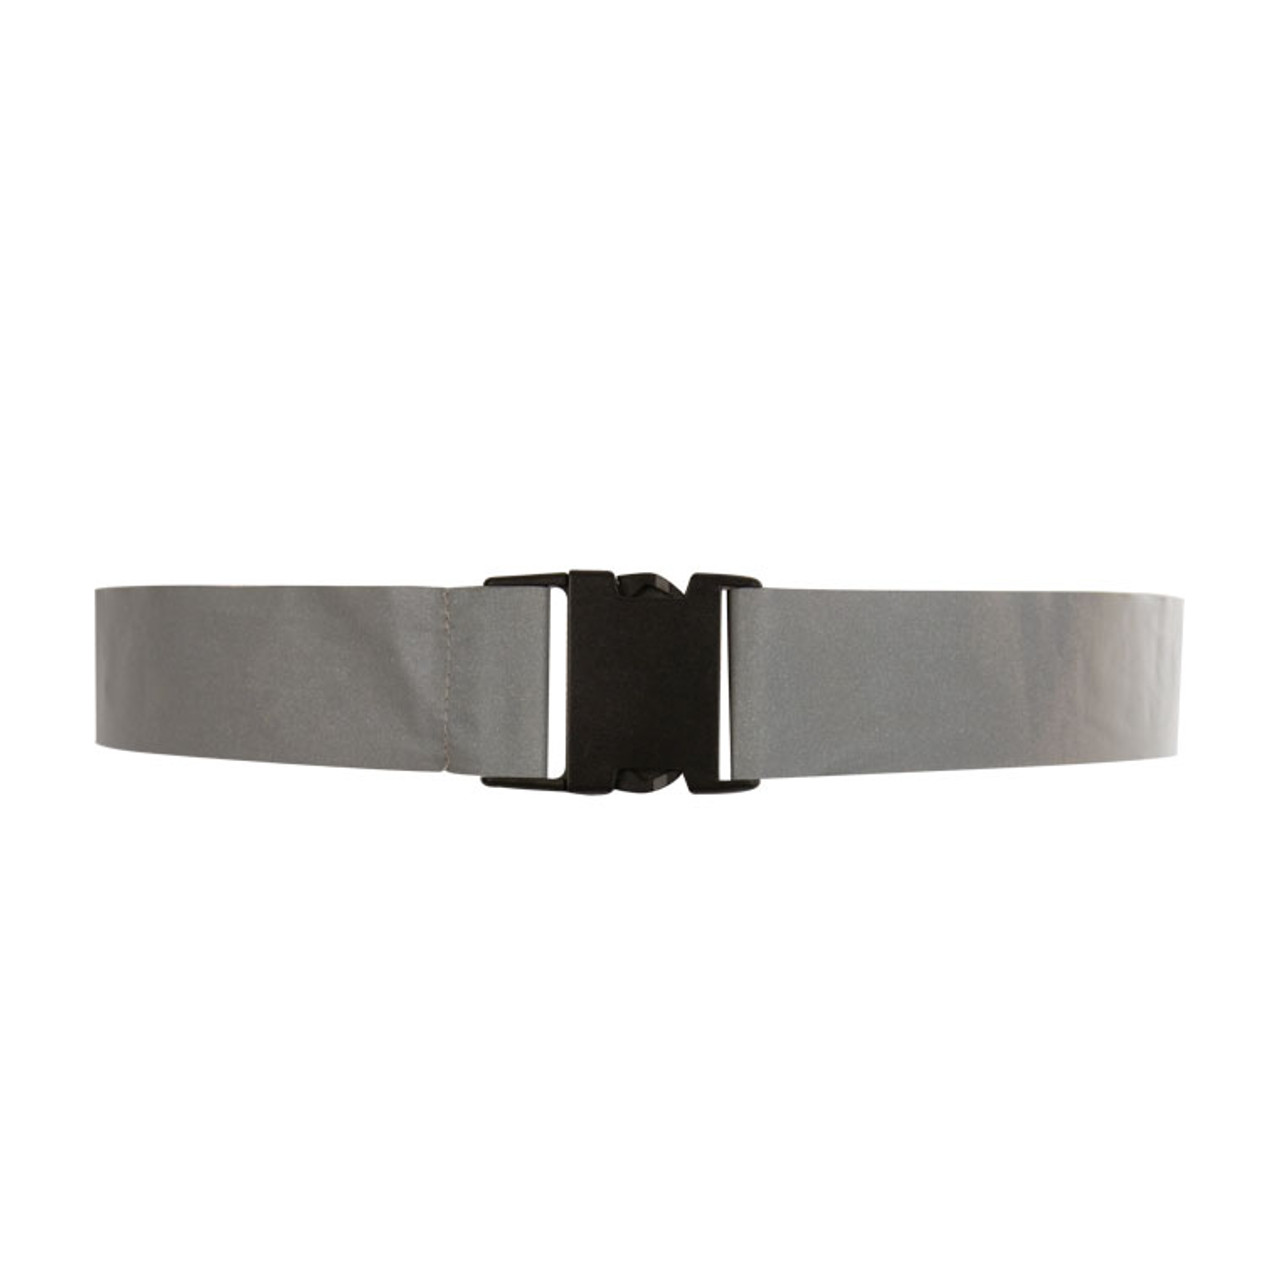 Reflective Safety Buckle Waist Belt Band – Greenish Yellow/Grey